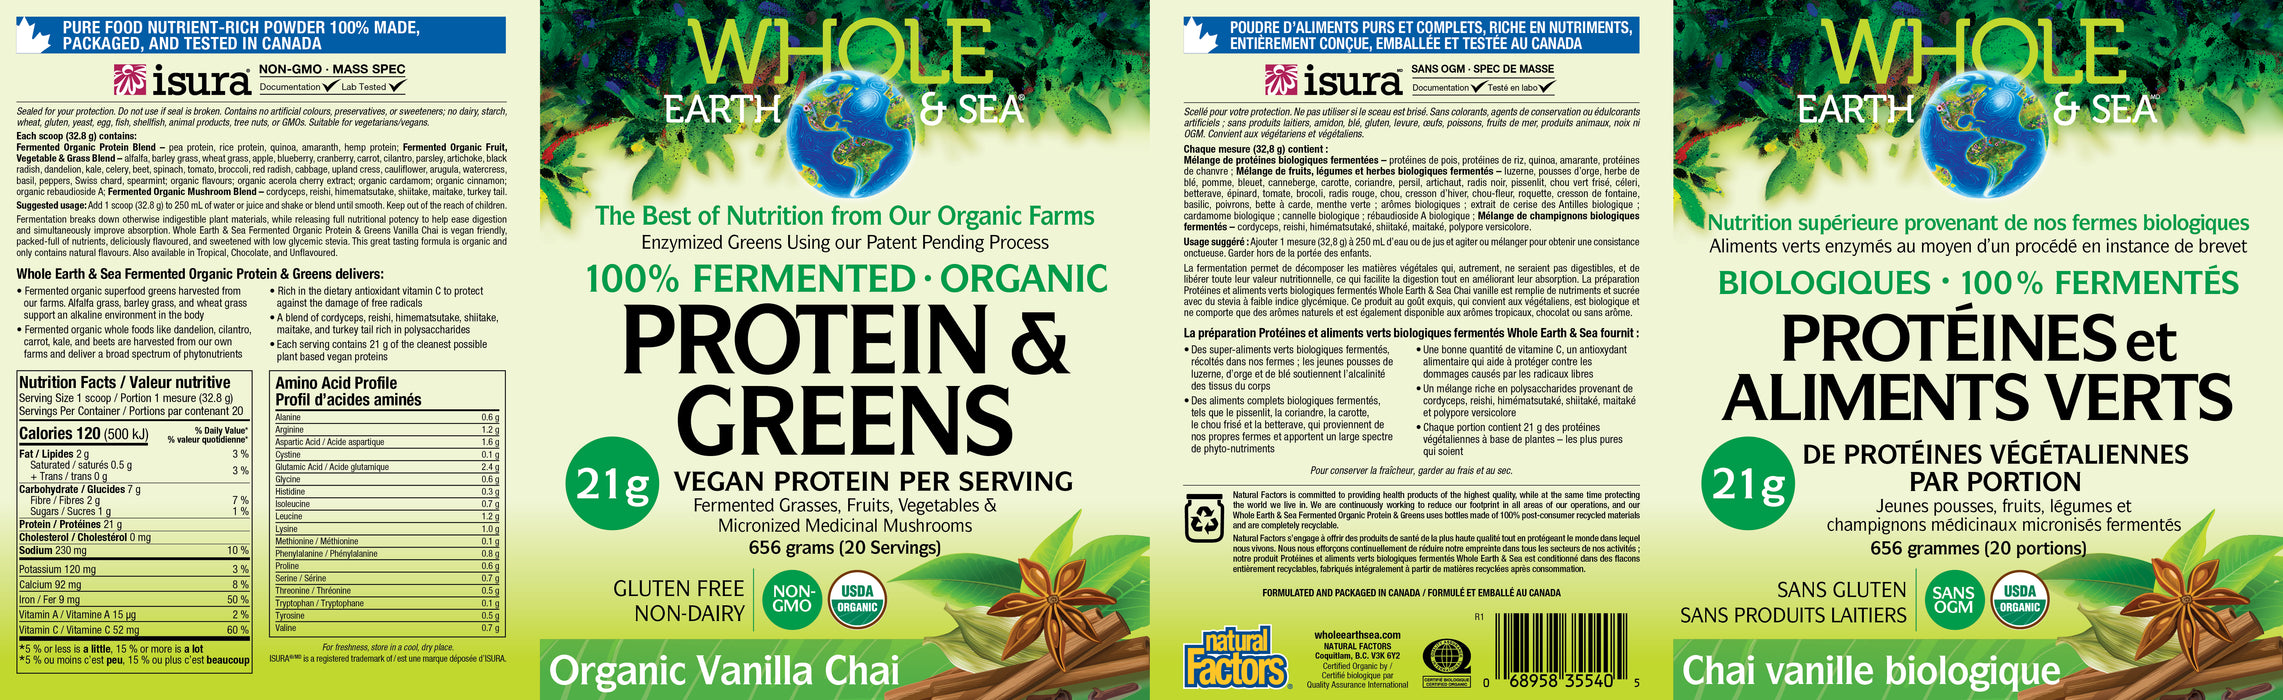 Whole Earth & Sea 100% Fermented Organic Protein & Greens - Vanilla Chai 656g